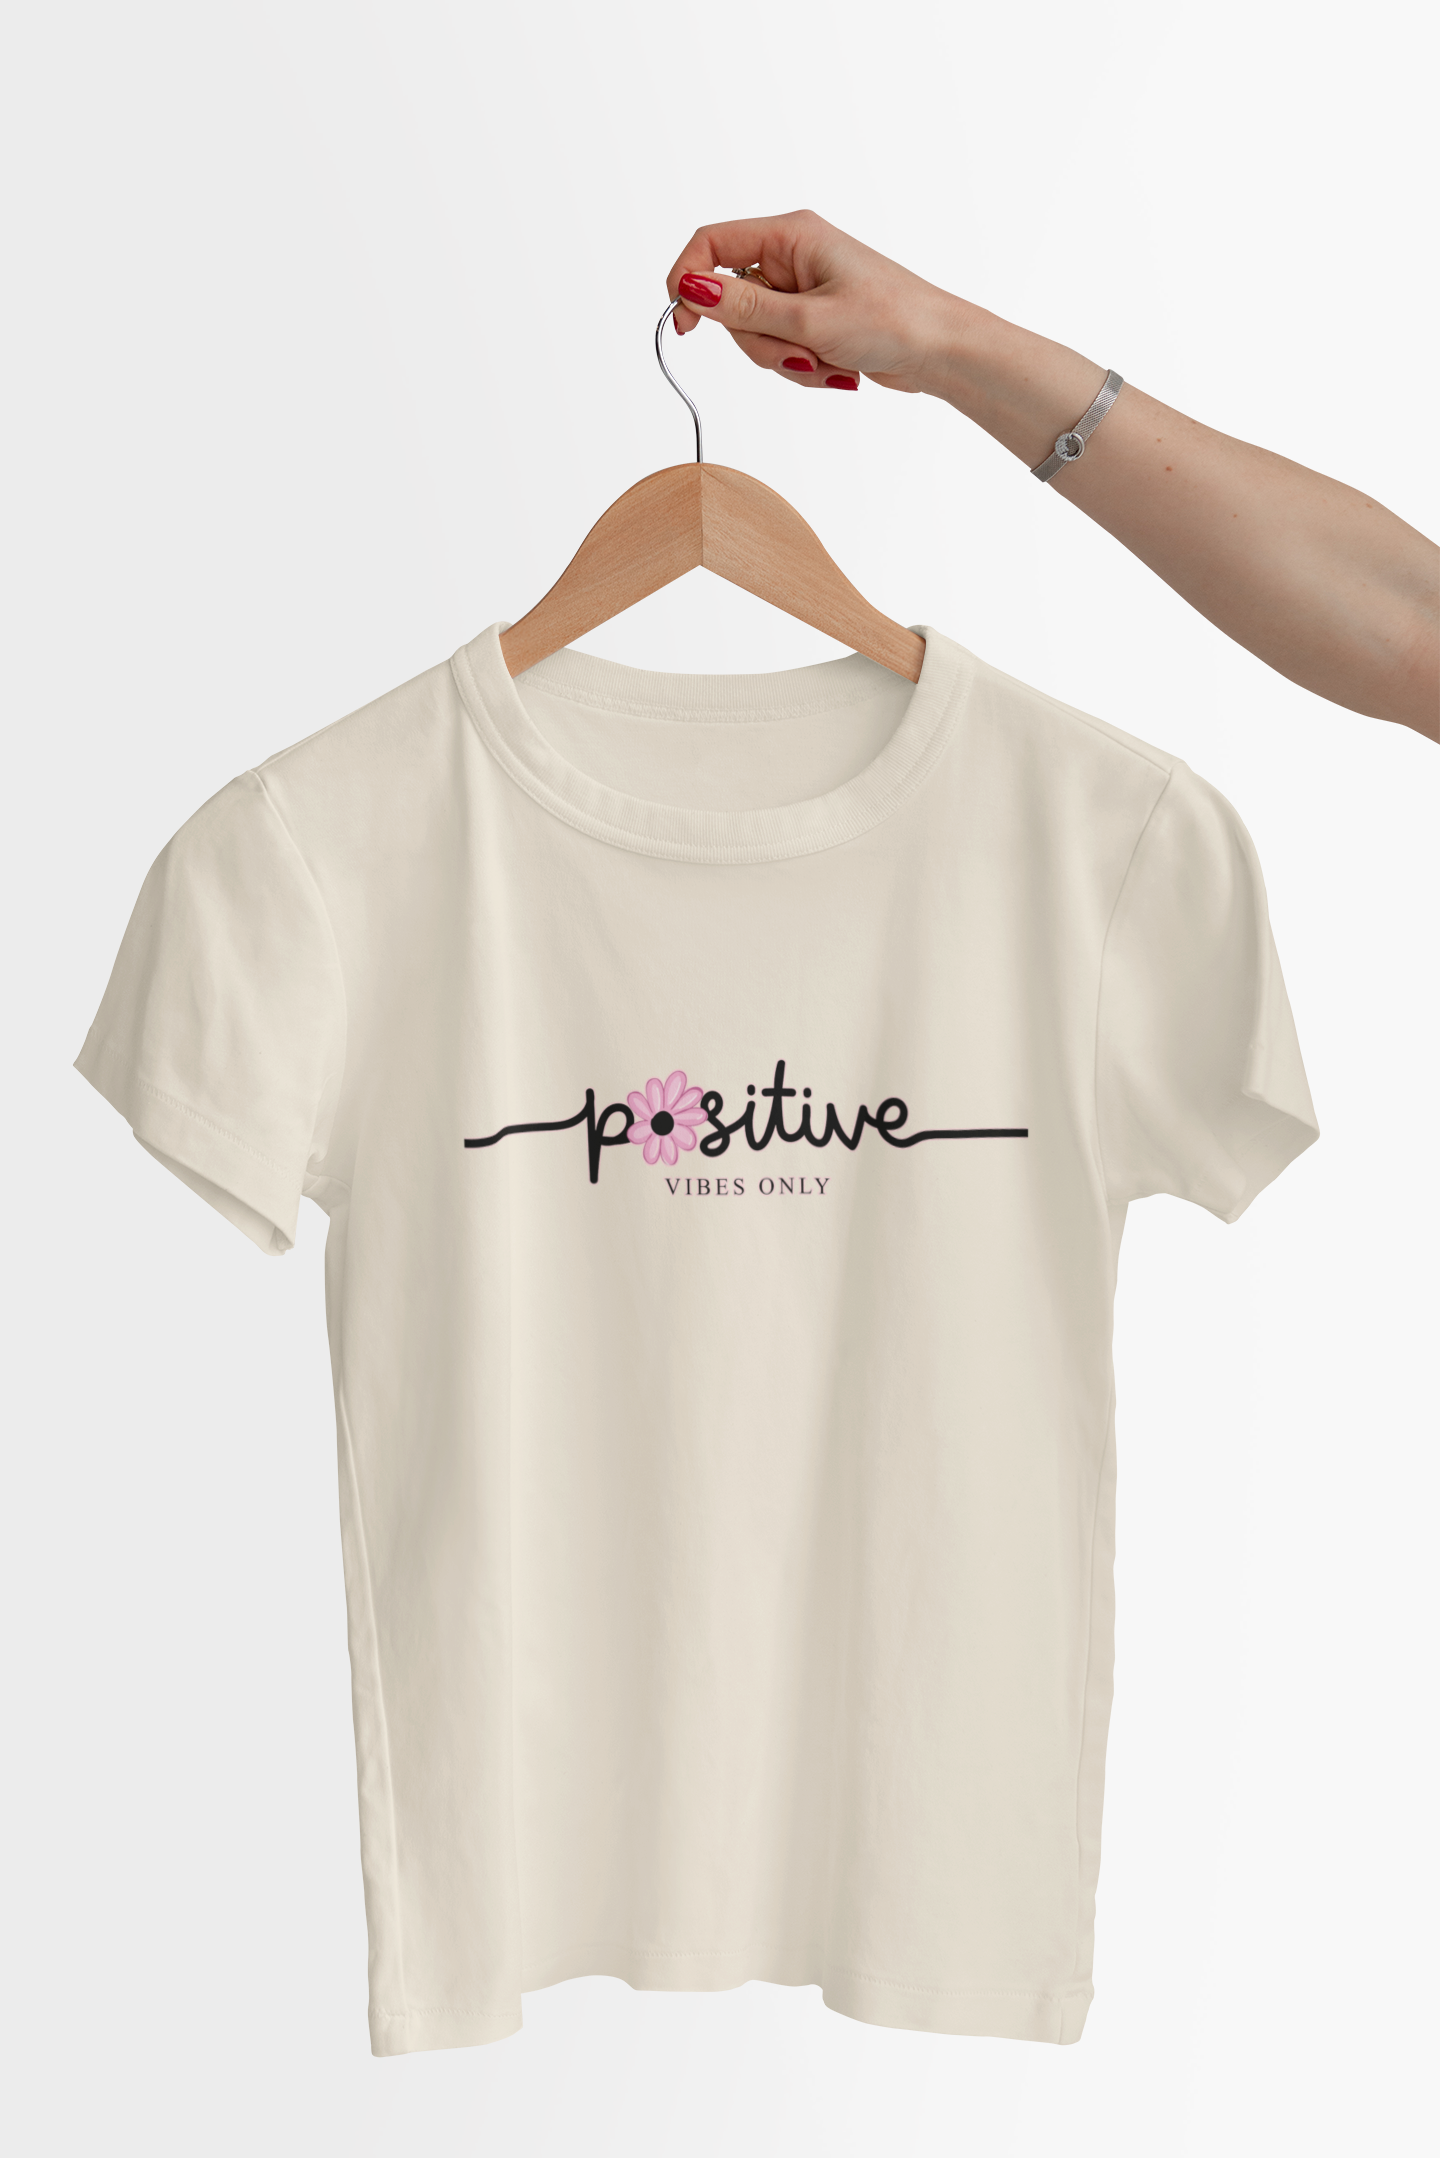 Positive Vibes - Adult T-Shirt